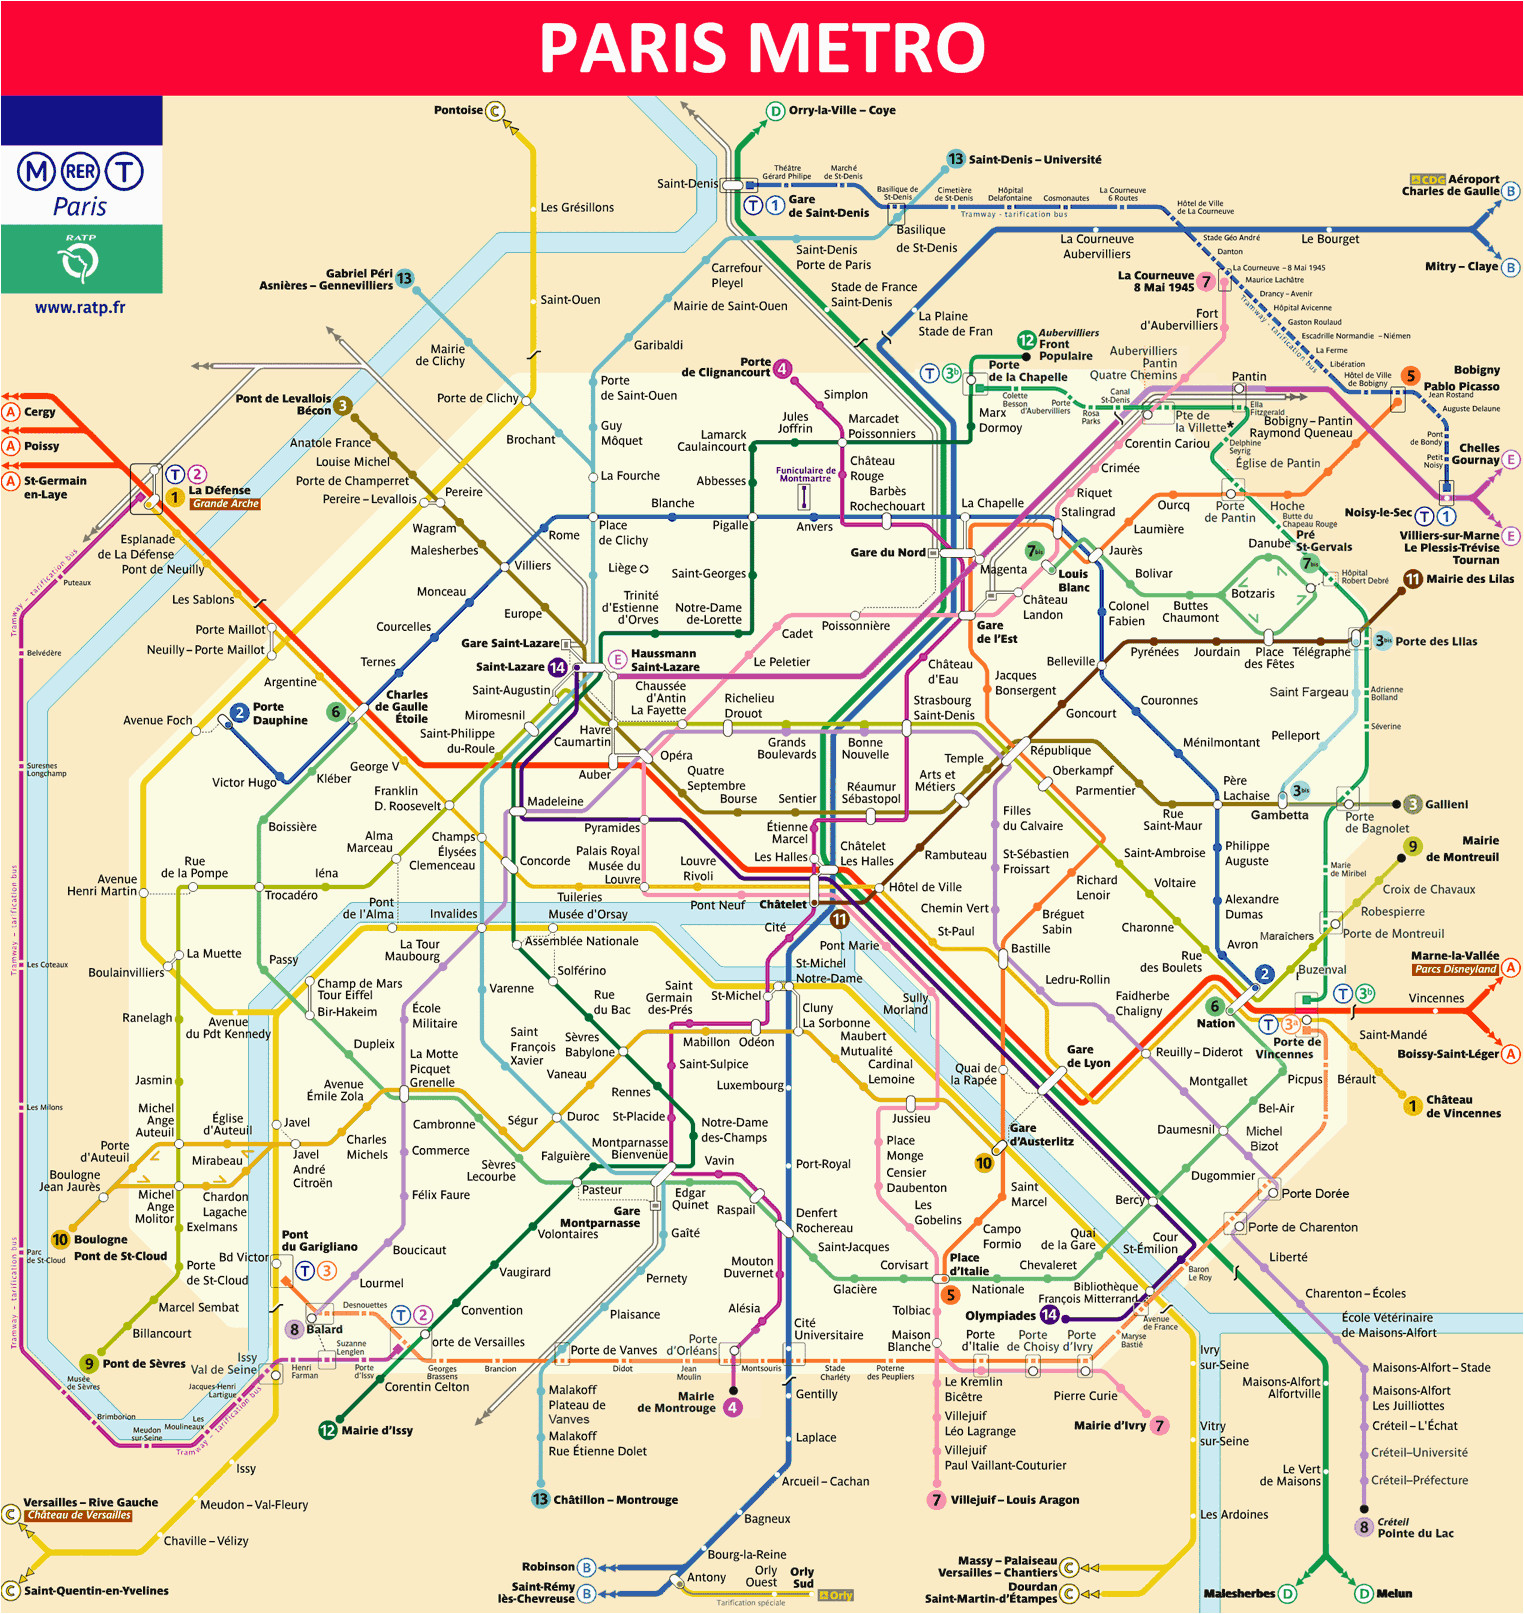 Metro Map Of Paris France In English | secretmuseum